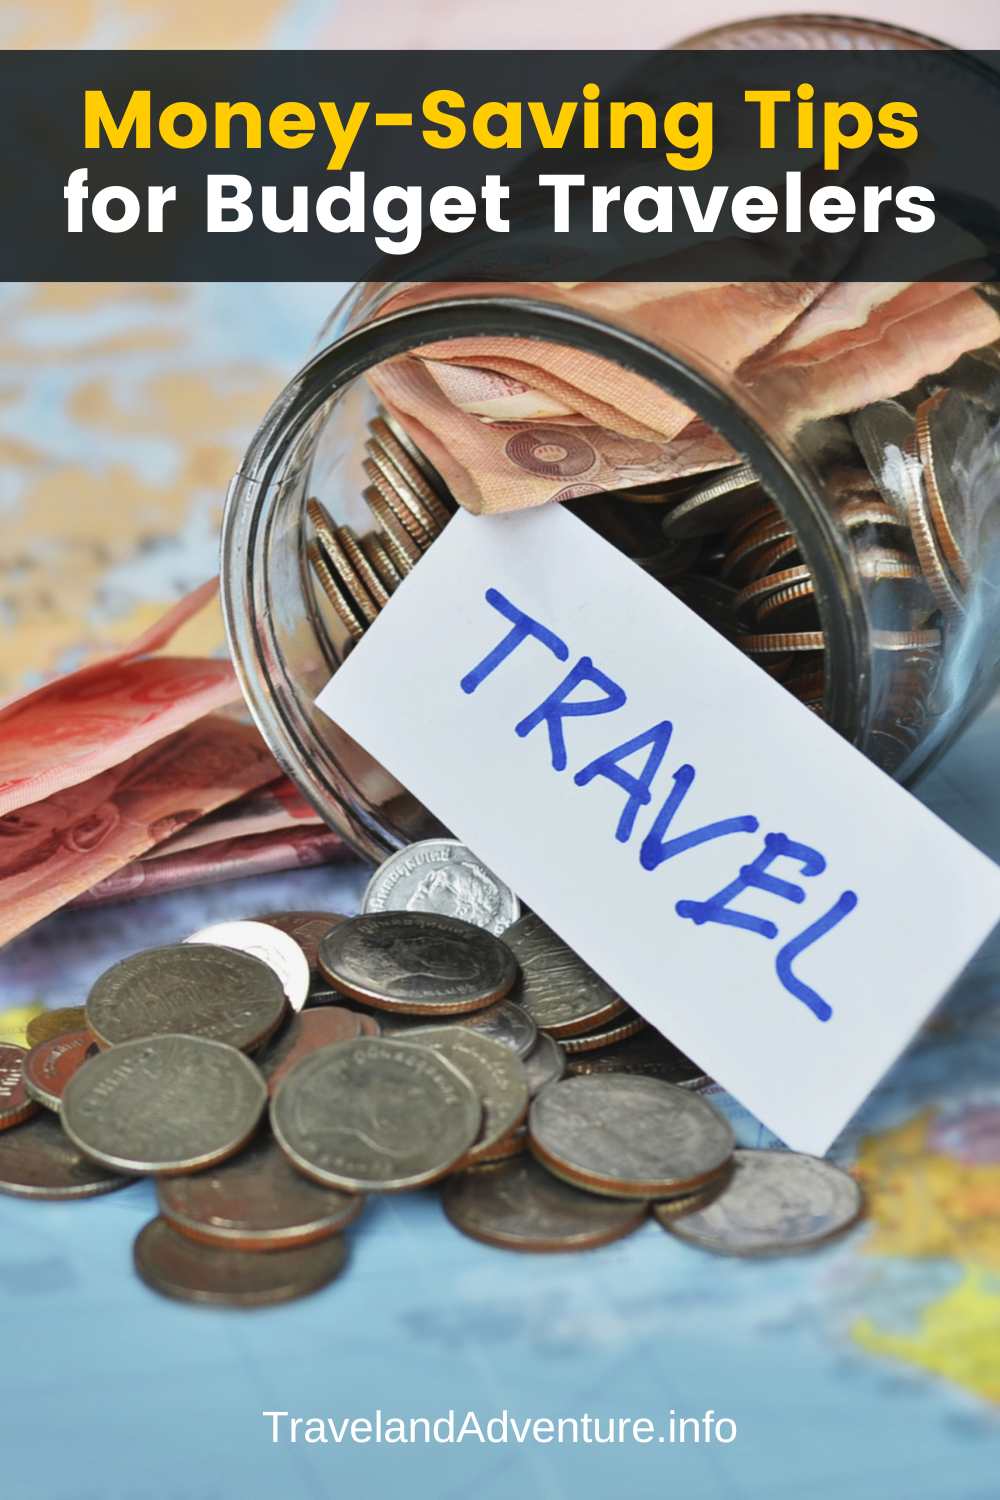 Money-Saving Tips for Budget Travelers